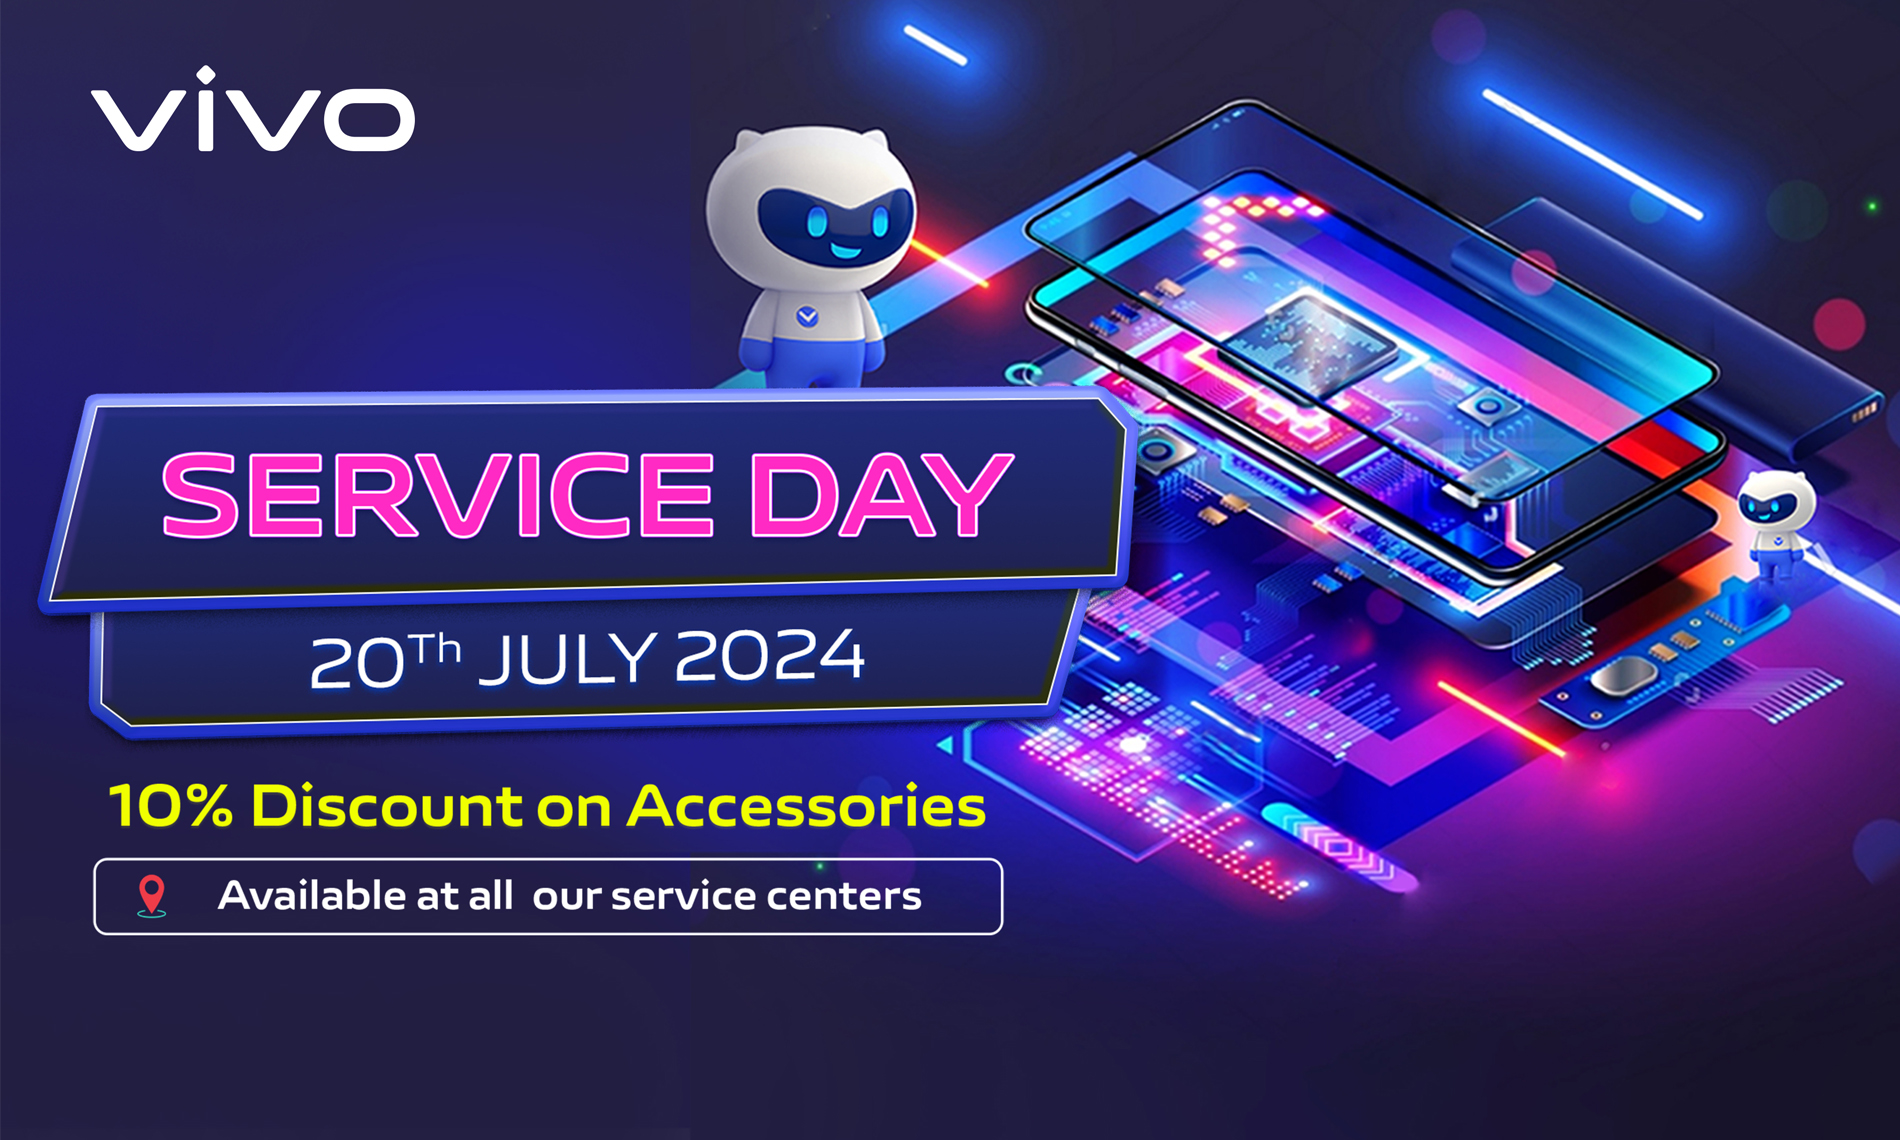 Enjoy vivo Service Day in July